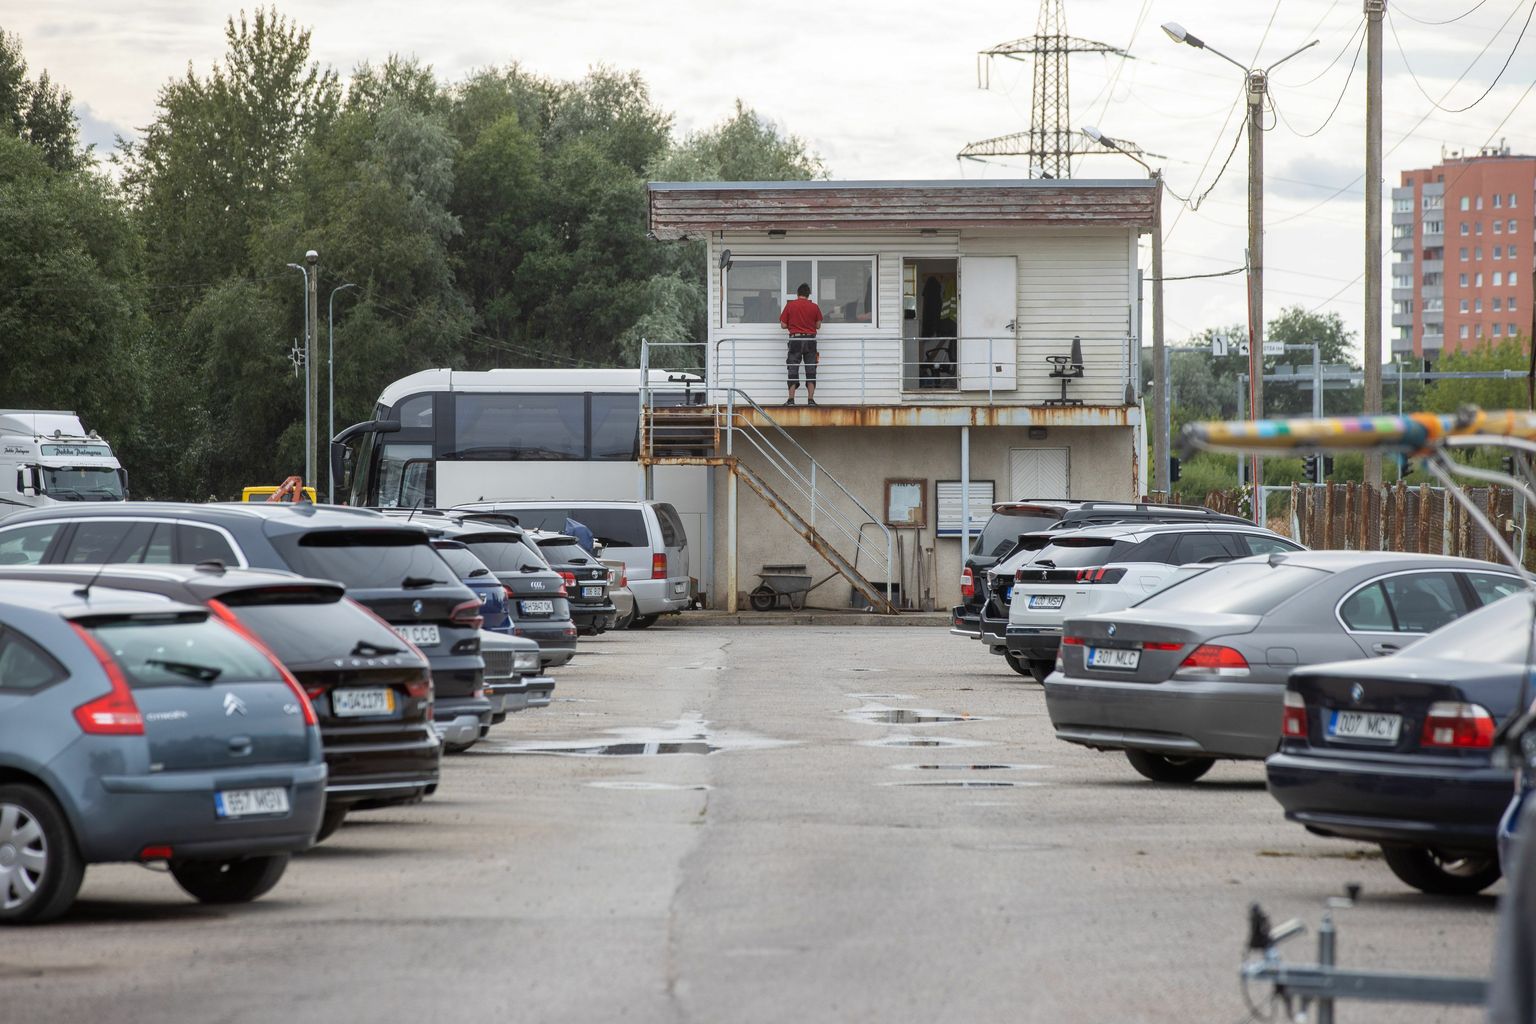 Бизнес, как всегда: нелегальная парковка на Ярвеотса теэ, 46 заставлена машинами.